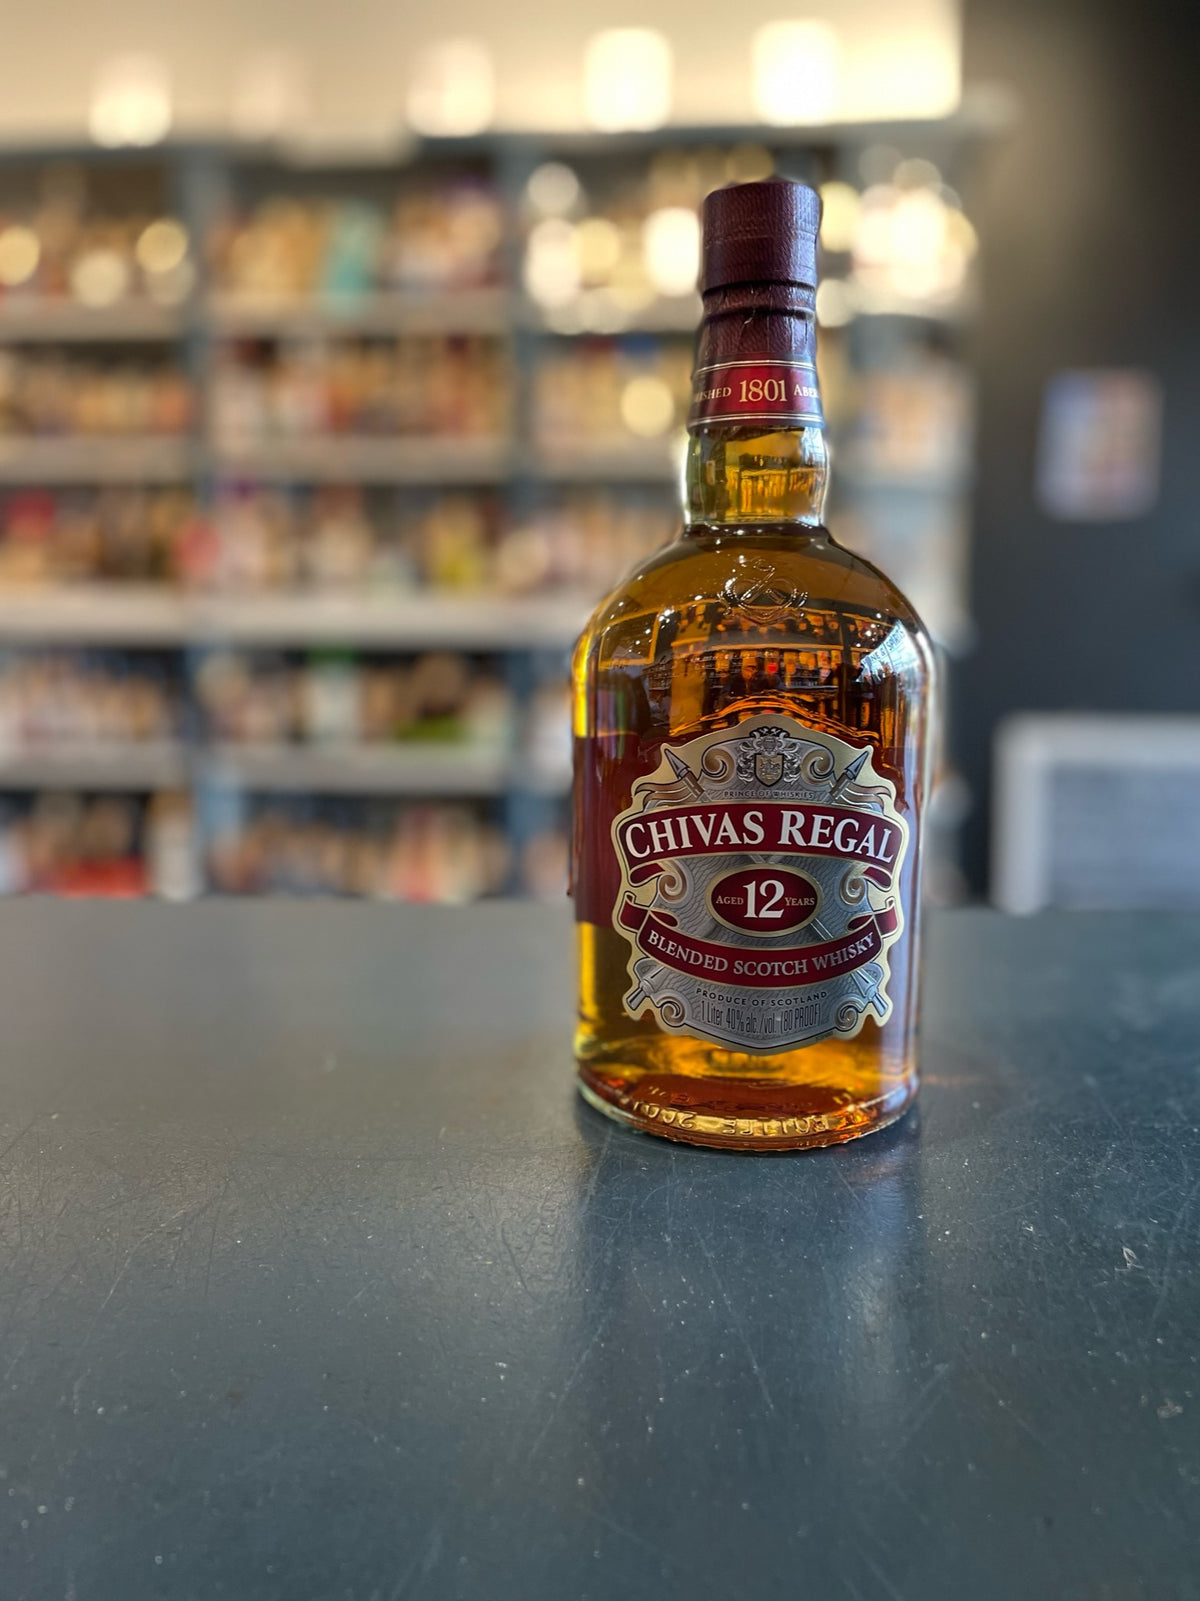 Chivas Regal Blended Scotch Whisky 12YR